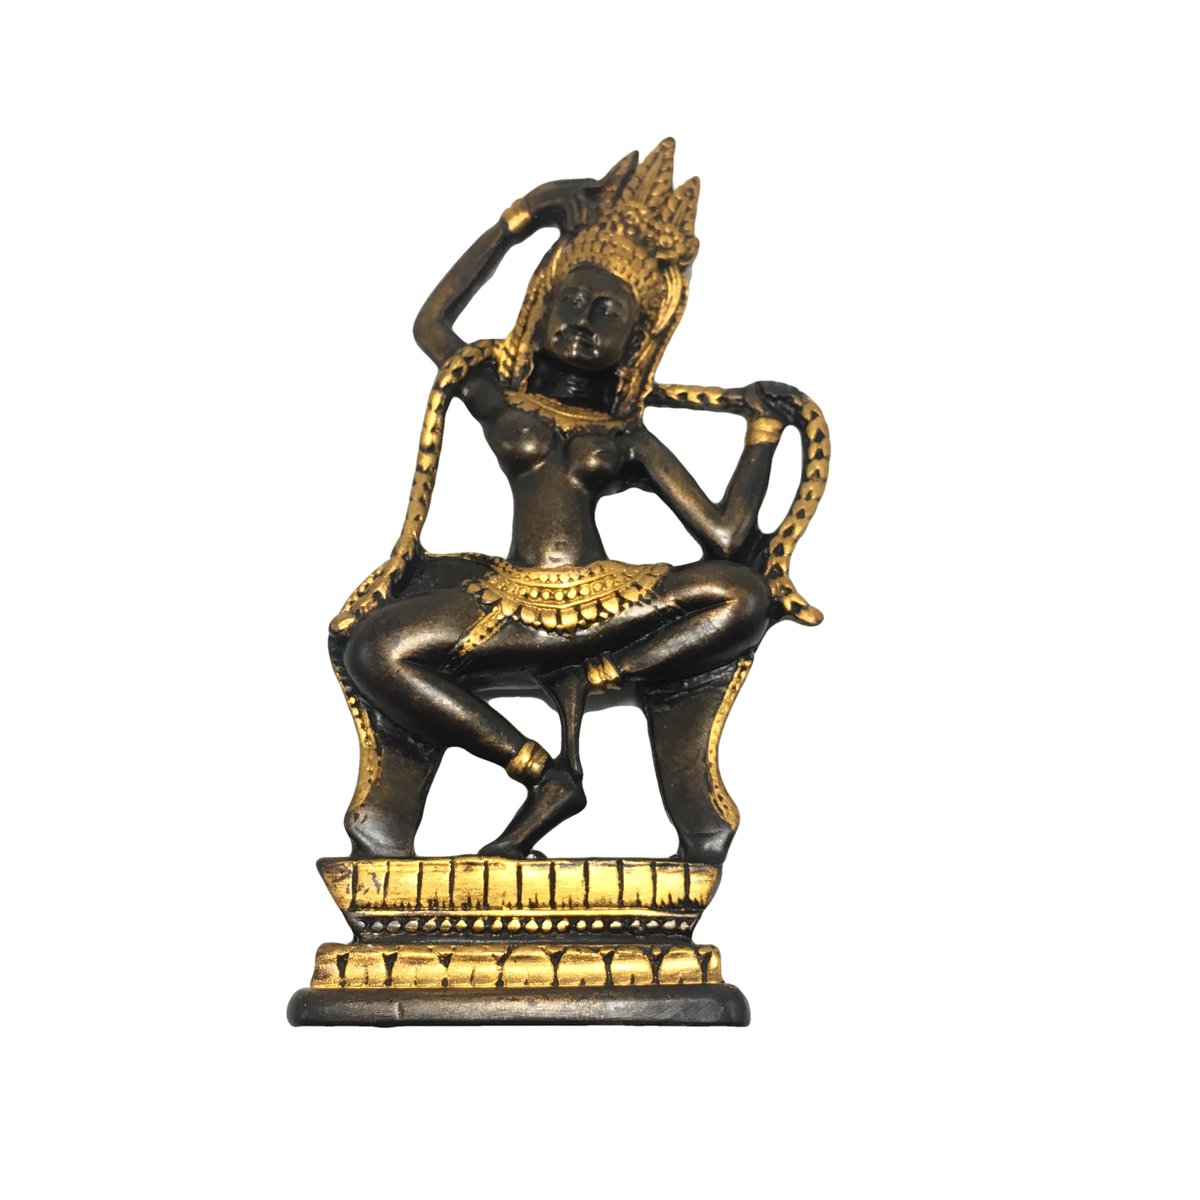 Check out Apsara Sculpture Gold Resin Brown Khmer Cambodia Angkor Wat Style Statue ebay.com/itm/2763708087… #eBay via @eBay